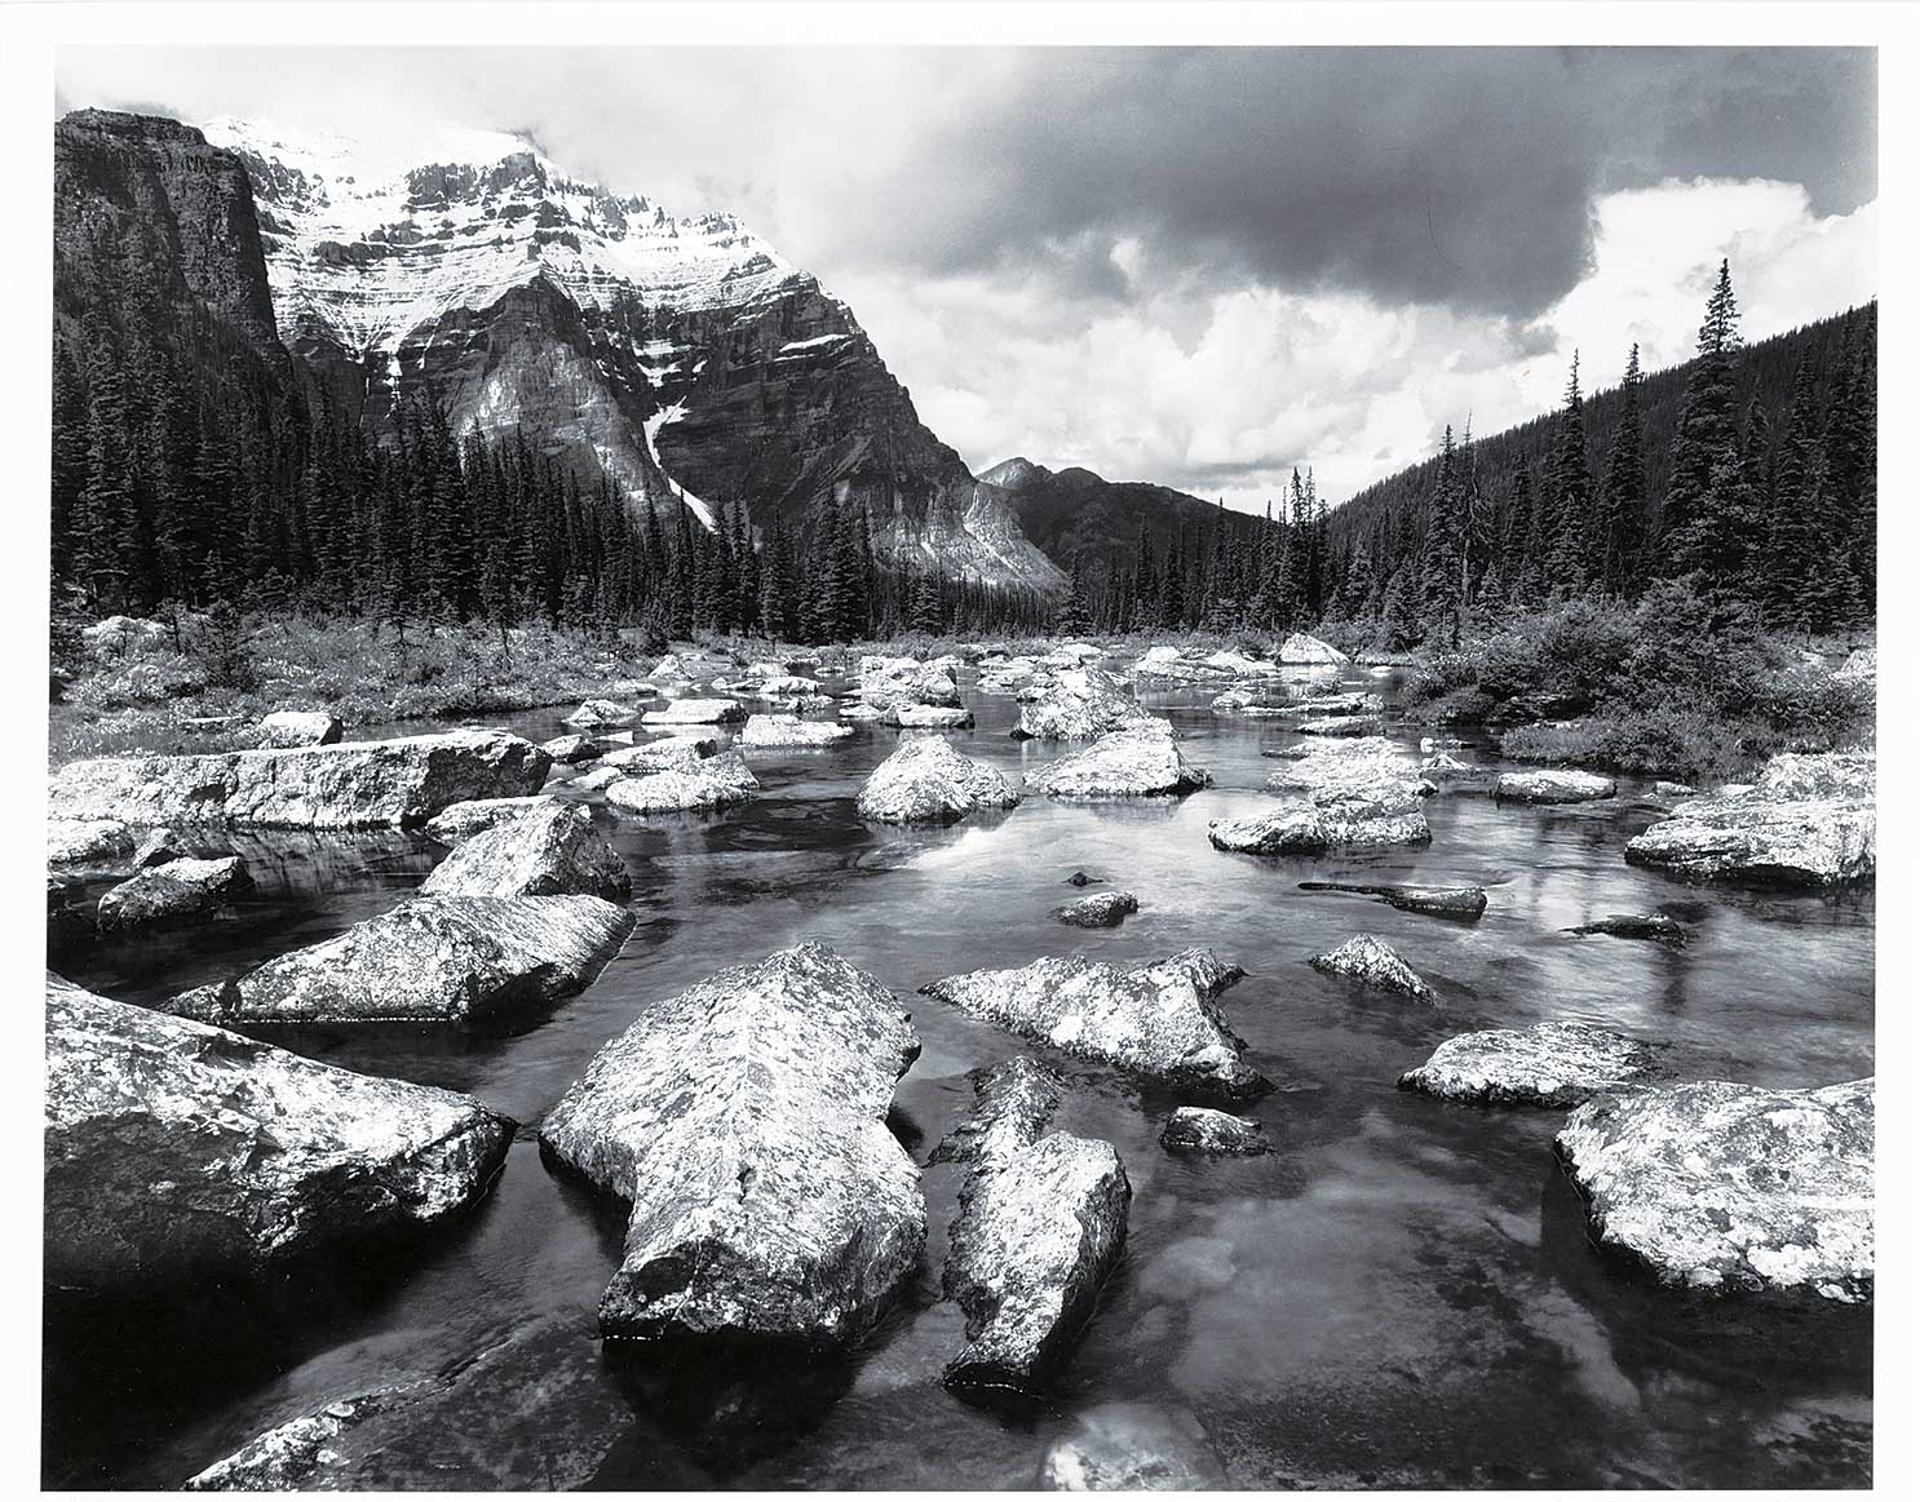 Craig Richards - Untitled - River Rocks [Canadian Rockies Series]